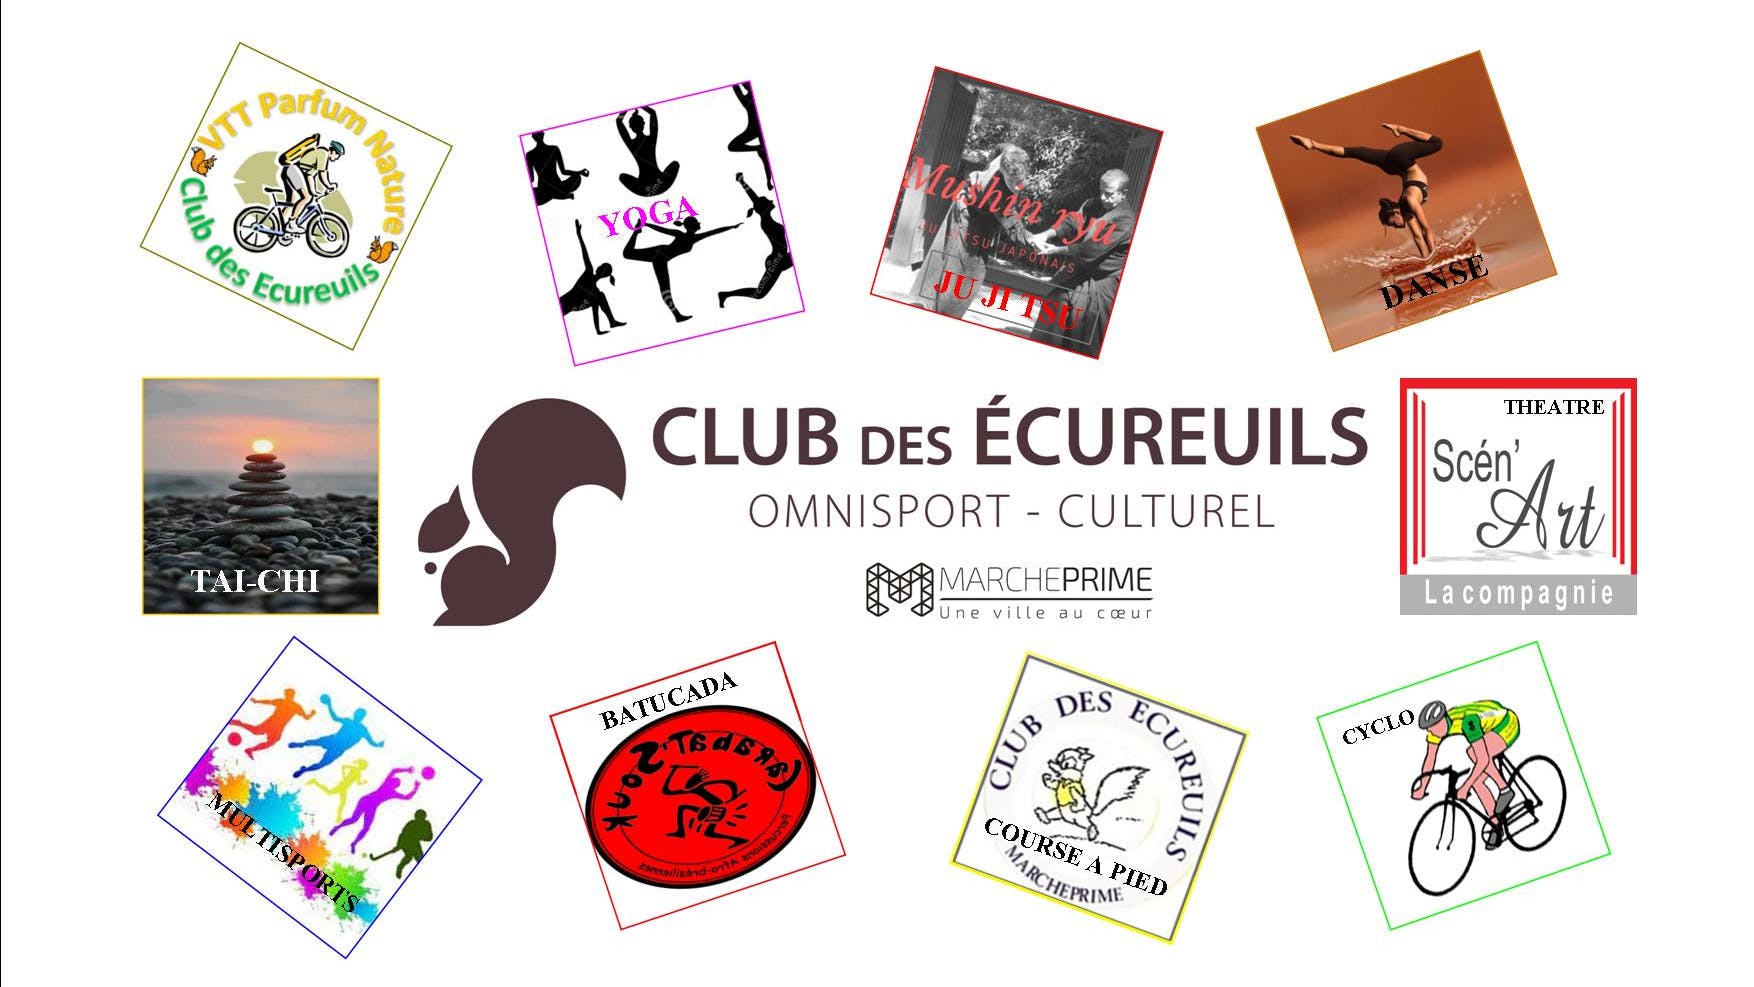 Club Omnisport et Culturel des Ecureuils